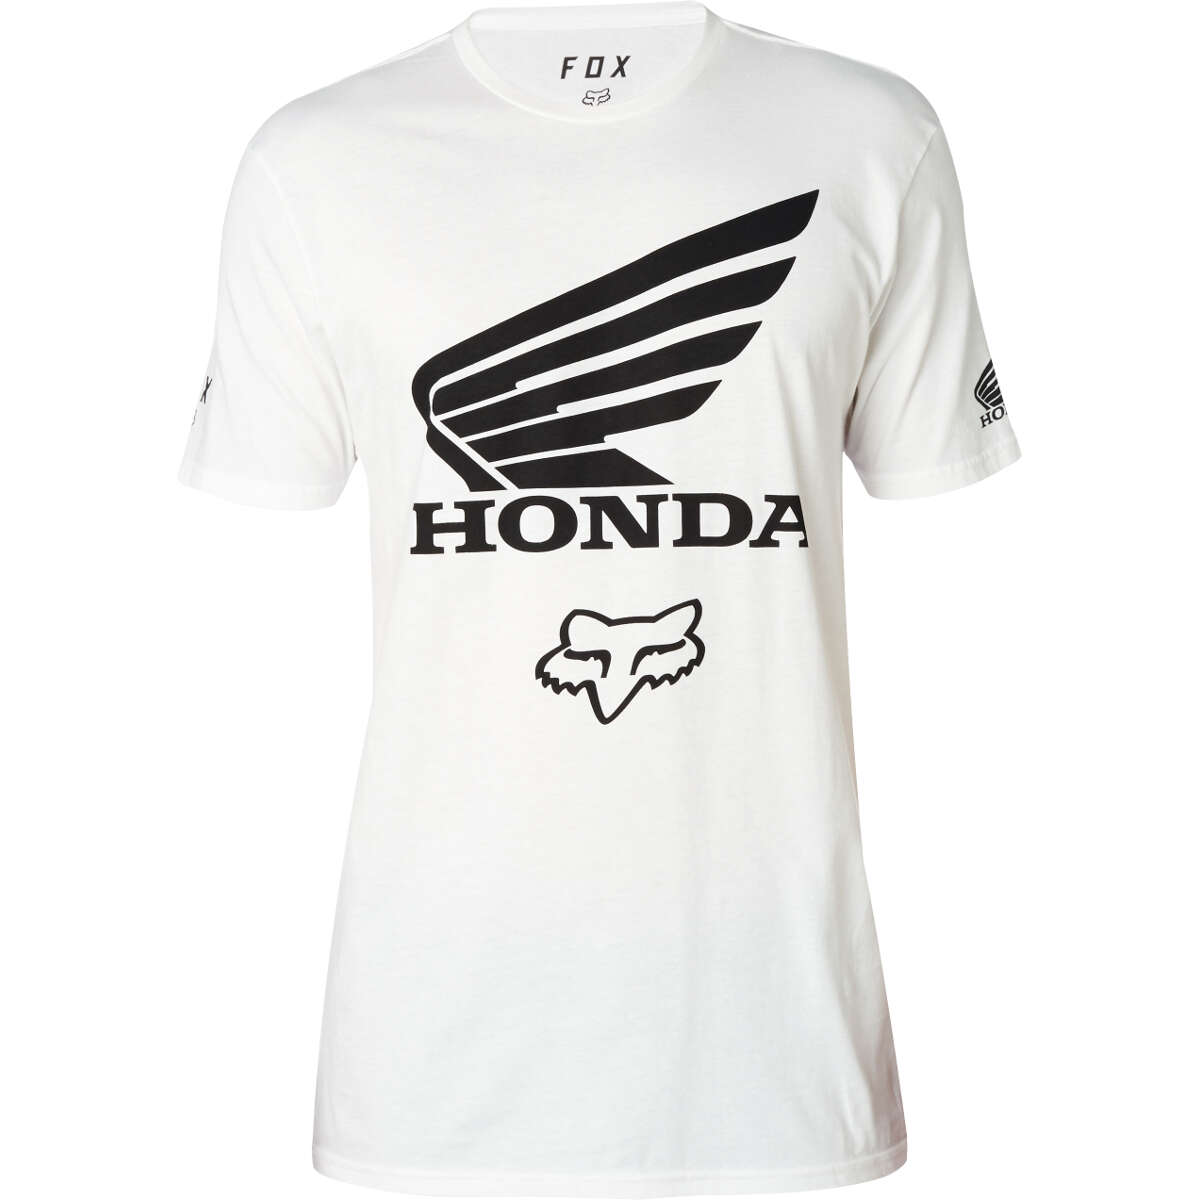 Fox T-Shirt Honda Premium Optic White